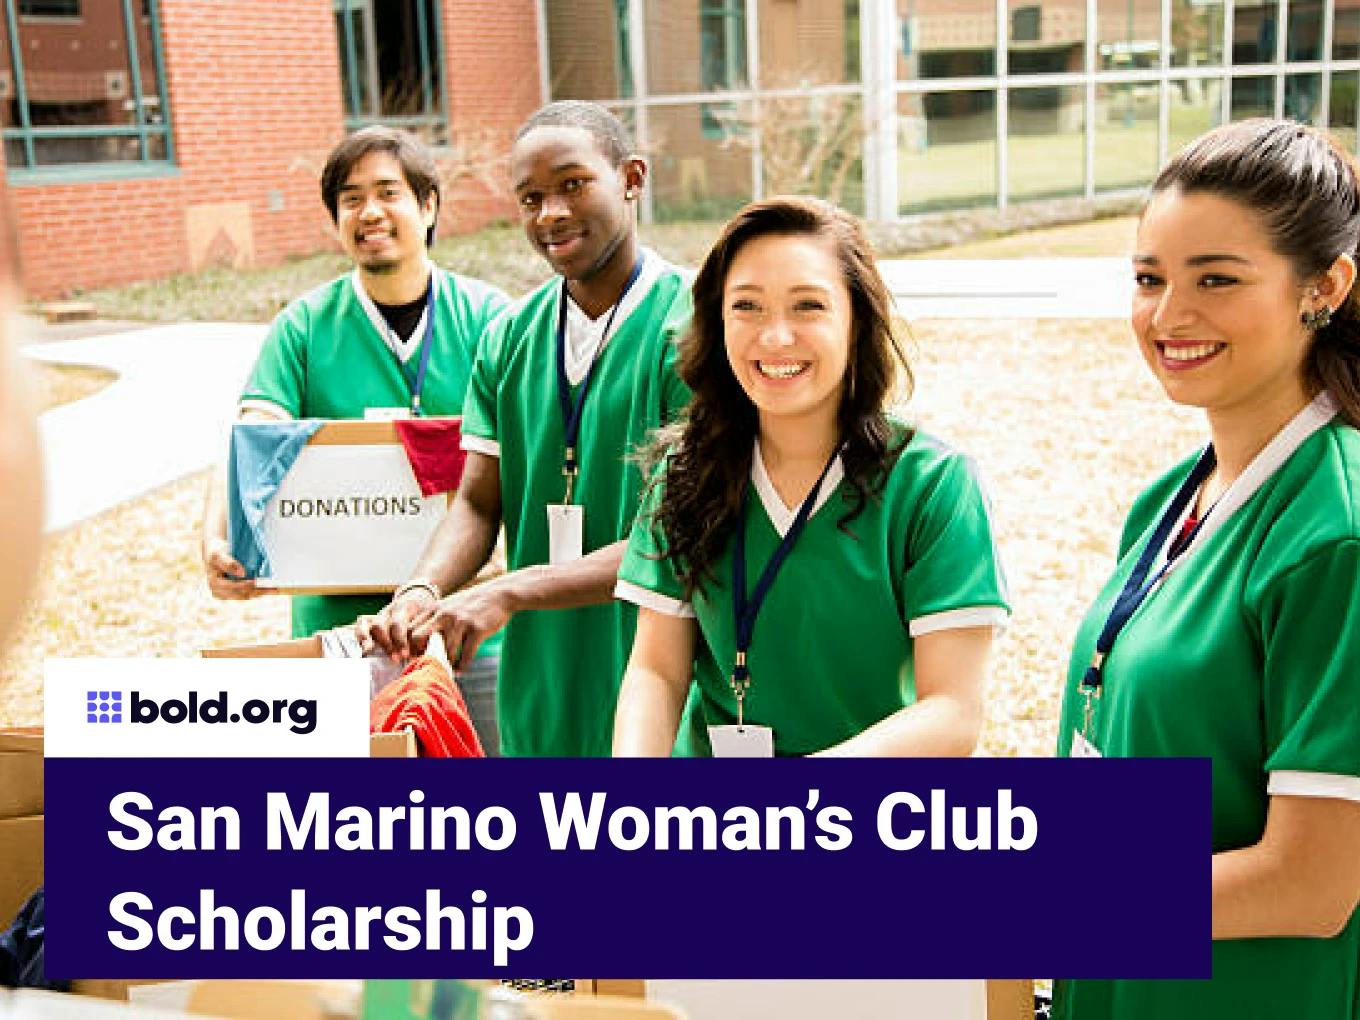 San Marino Woman’s Club Scholarship